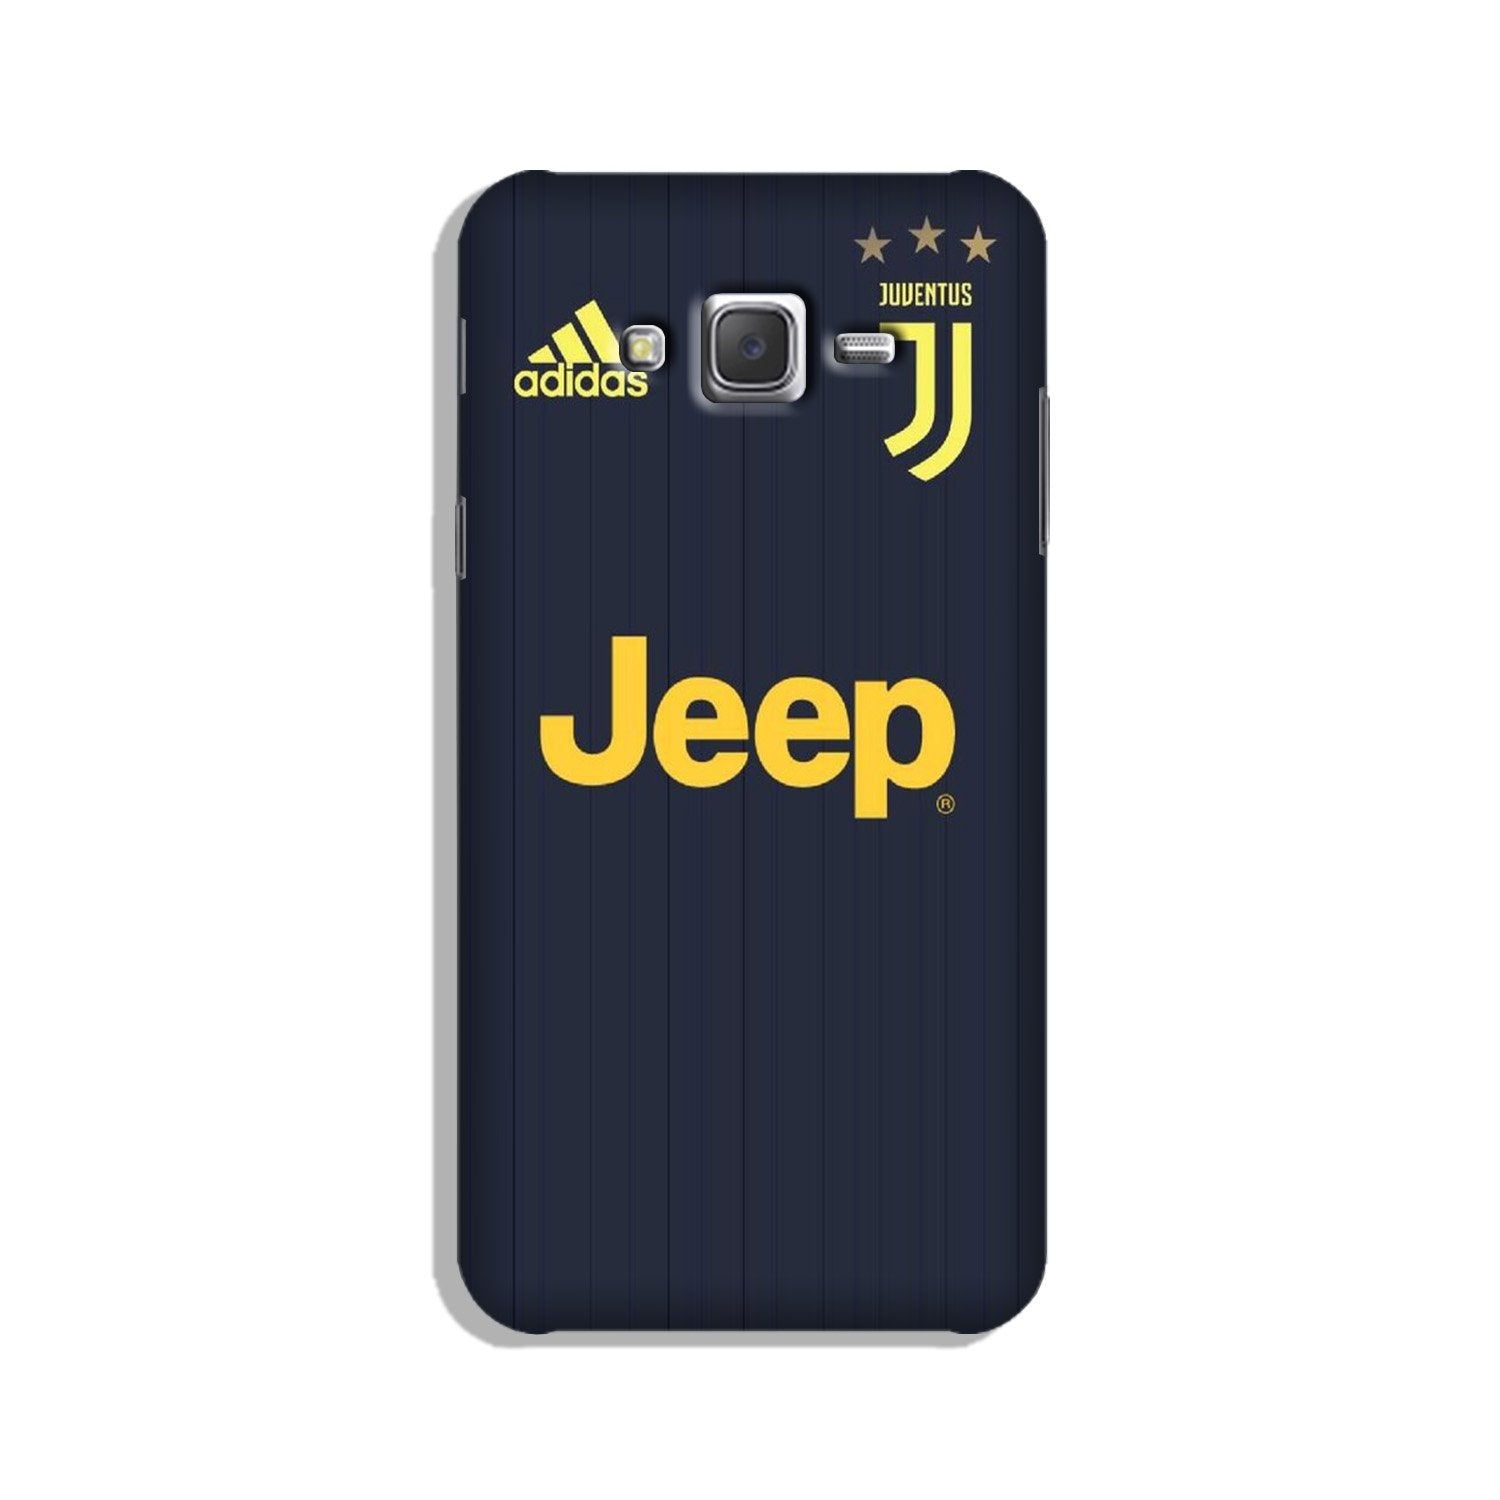 Jeep Juventus Case for Galaxy J7 (2015)  (Design - 161)